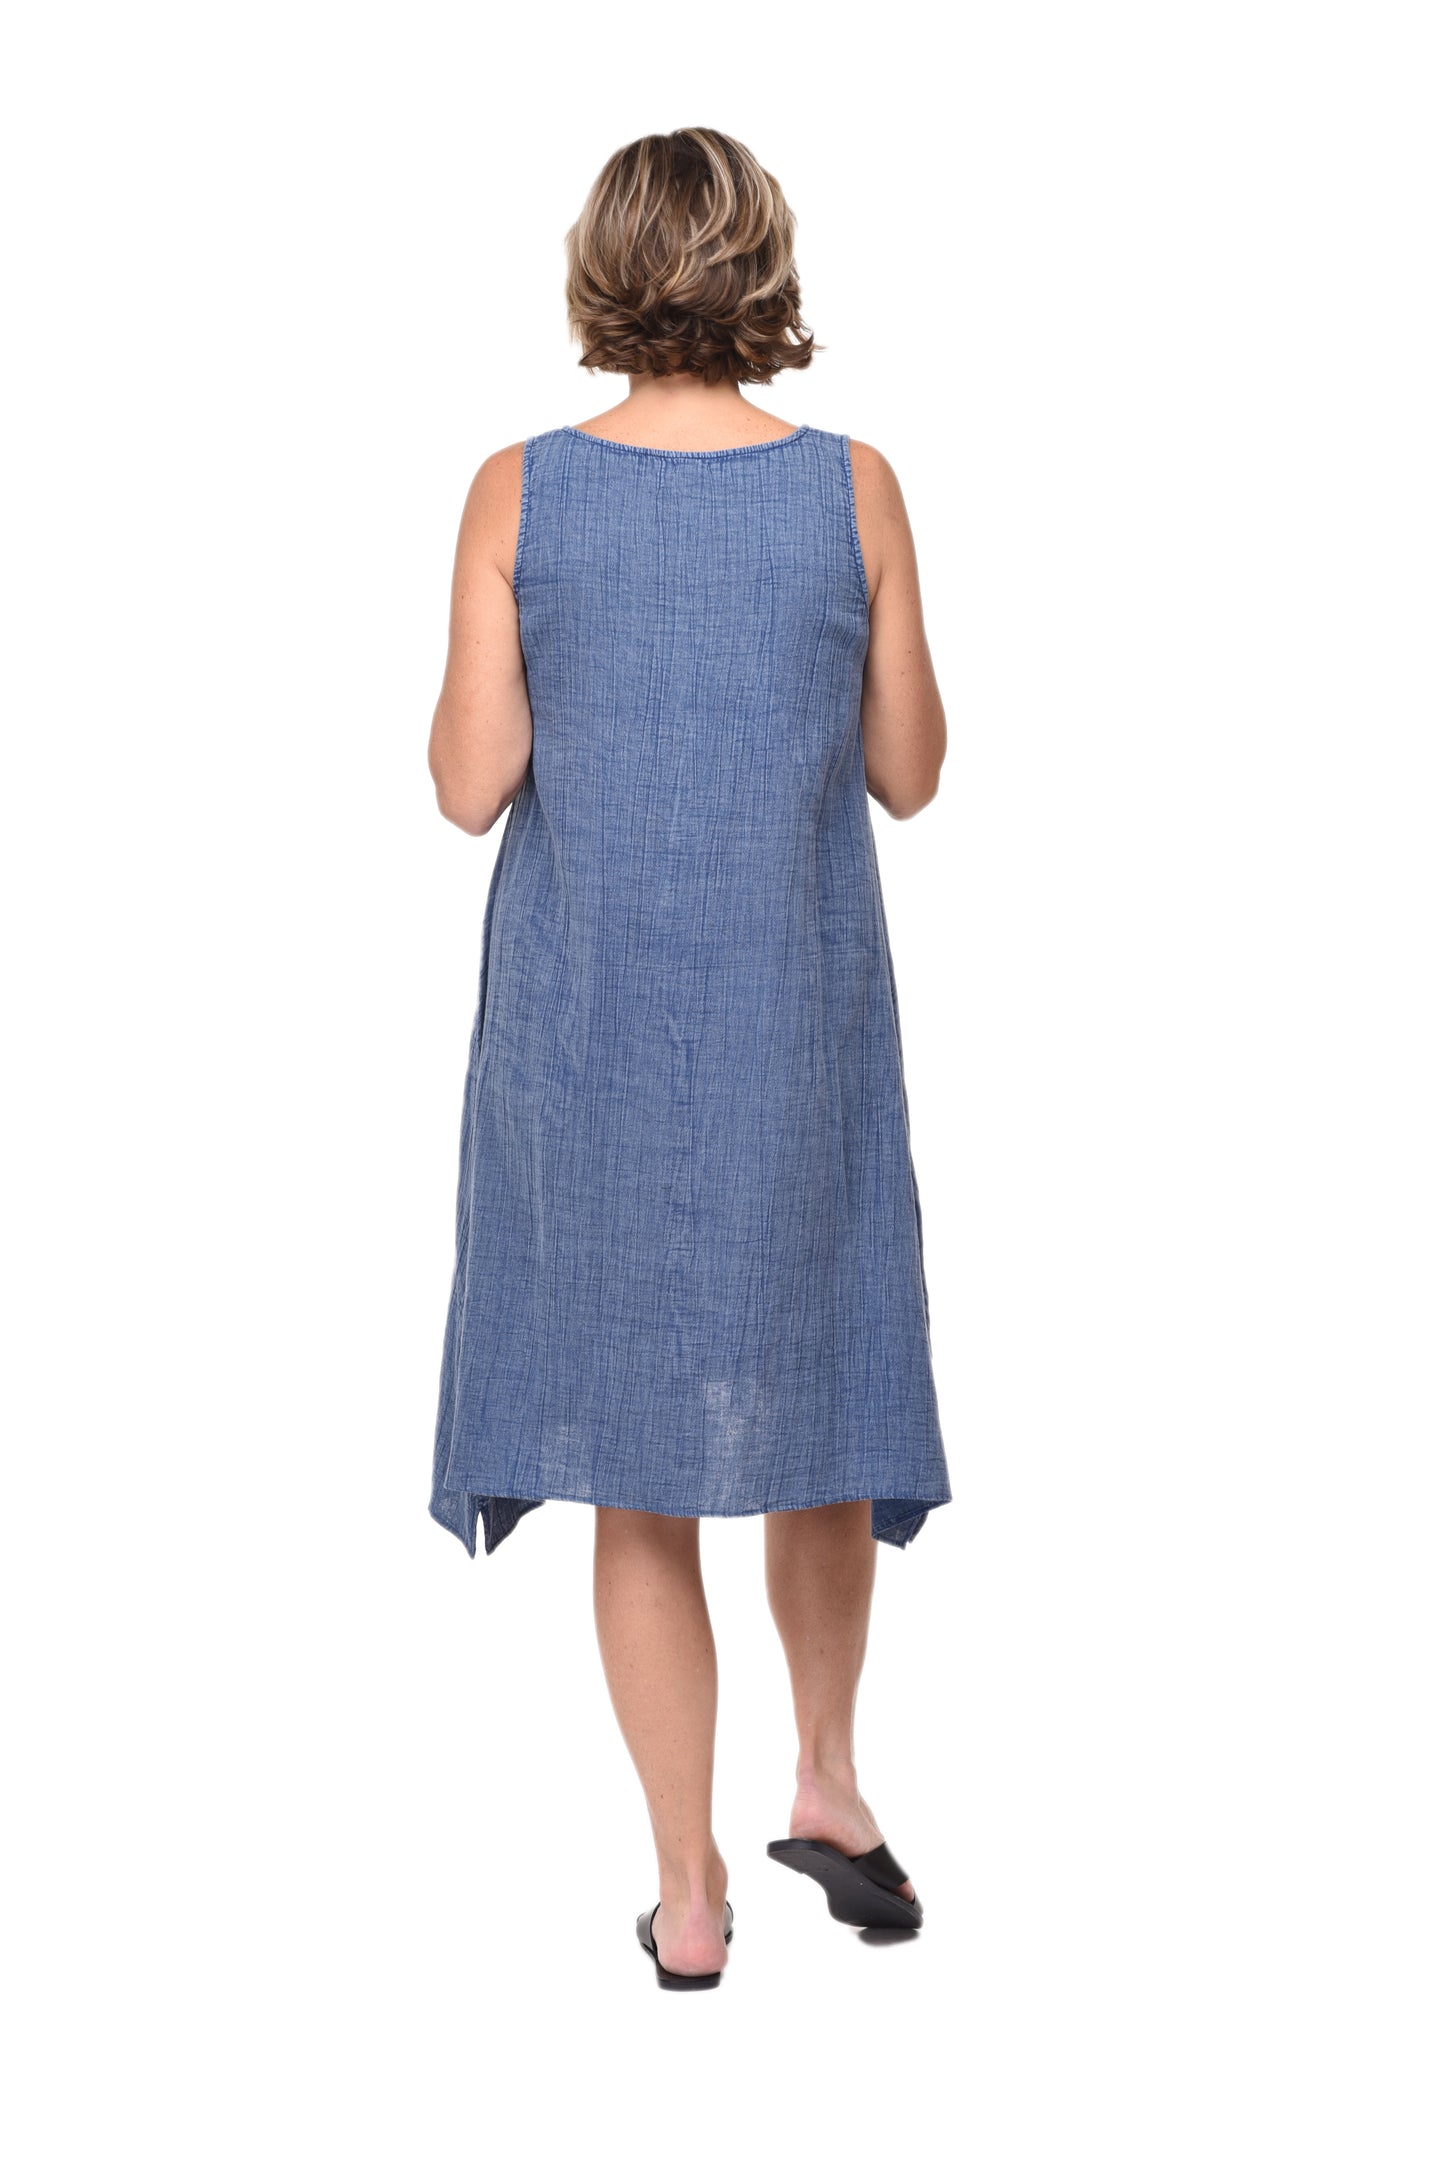 VCG525 Fallon Dress in French Blue